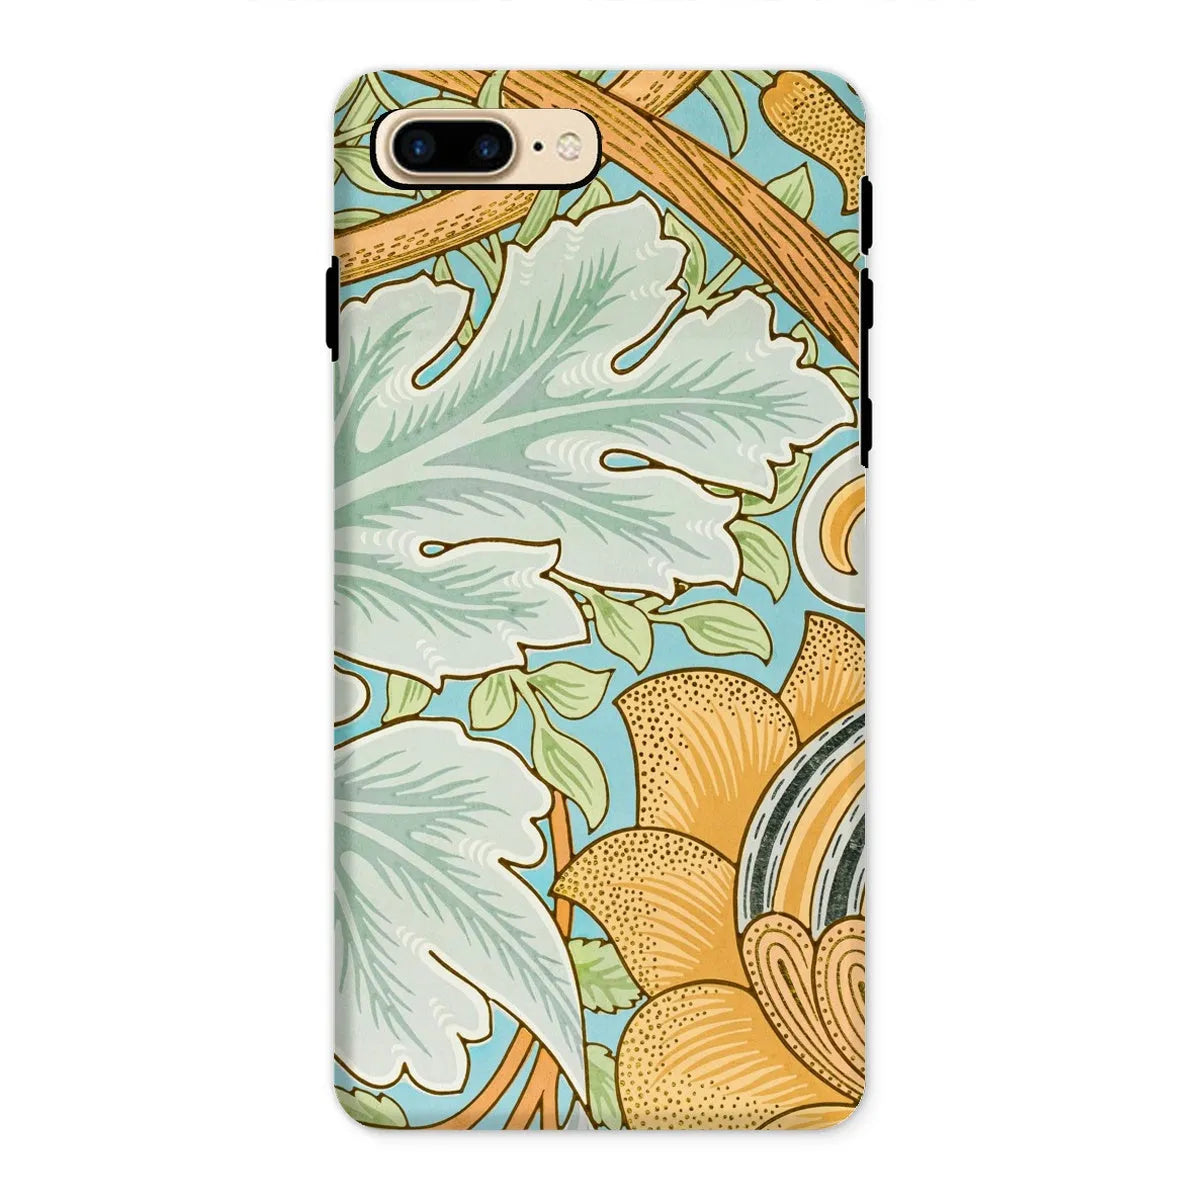 St. James - Arts And Crafts Phone Case - William Morris - Iphone 8 Plus / Matte - Mobile Phone Cases - Aesthetic Art